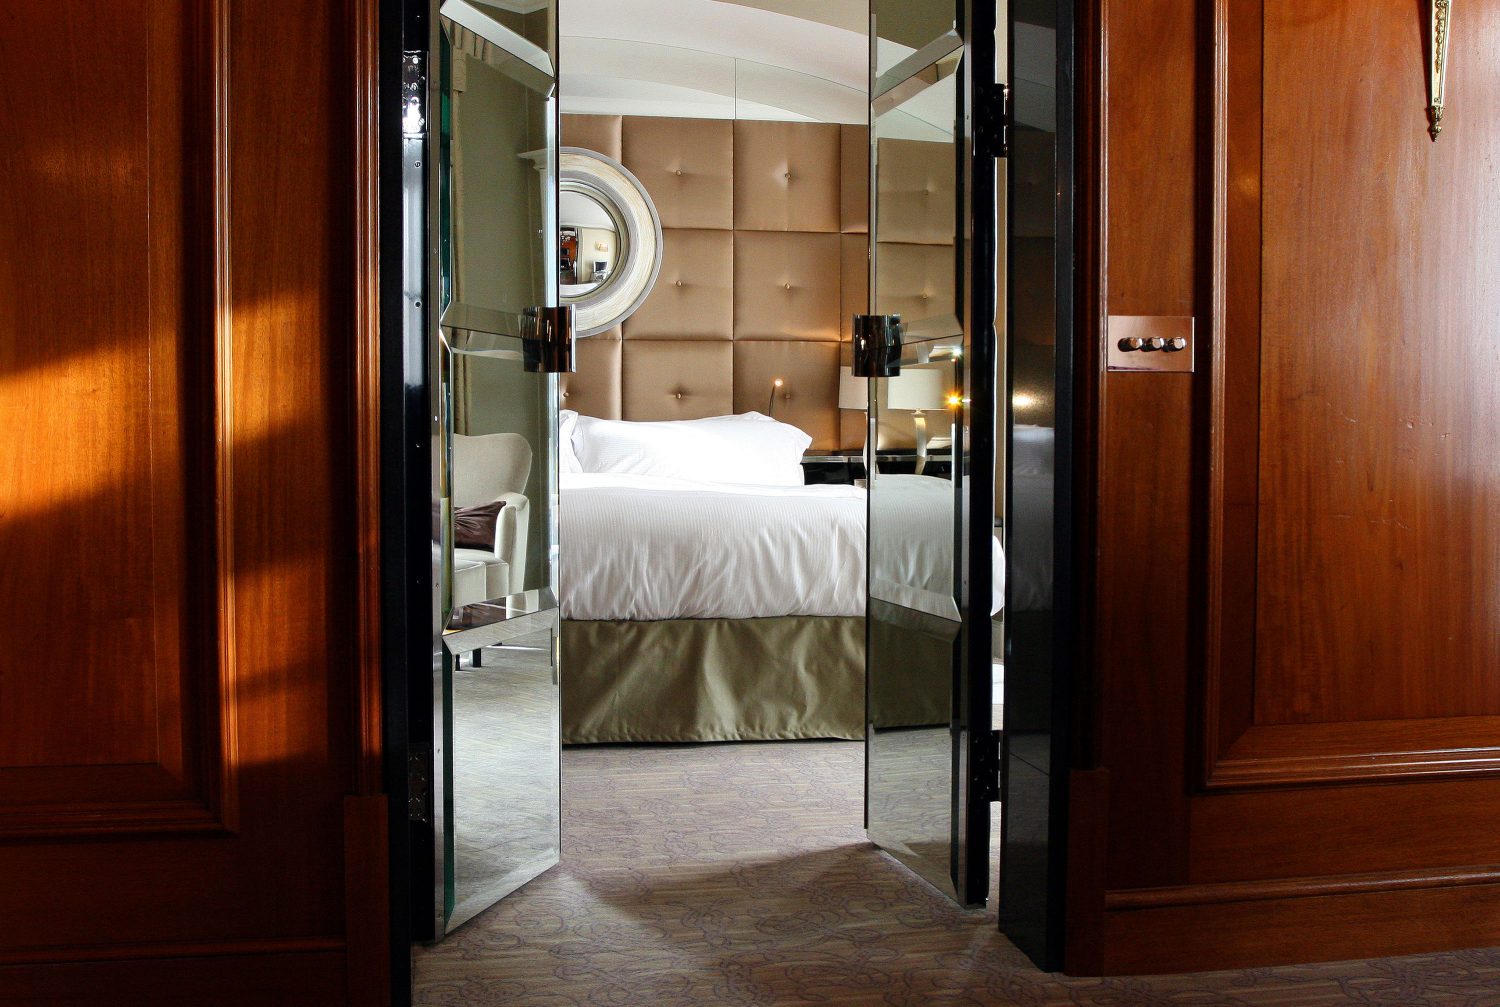 Chelsea Suite at The Berkeley Hotel by Daniel Hopwood – wooden panelling, bedroom. Boutique hotel design